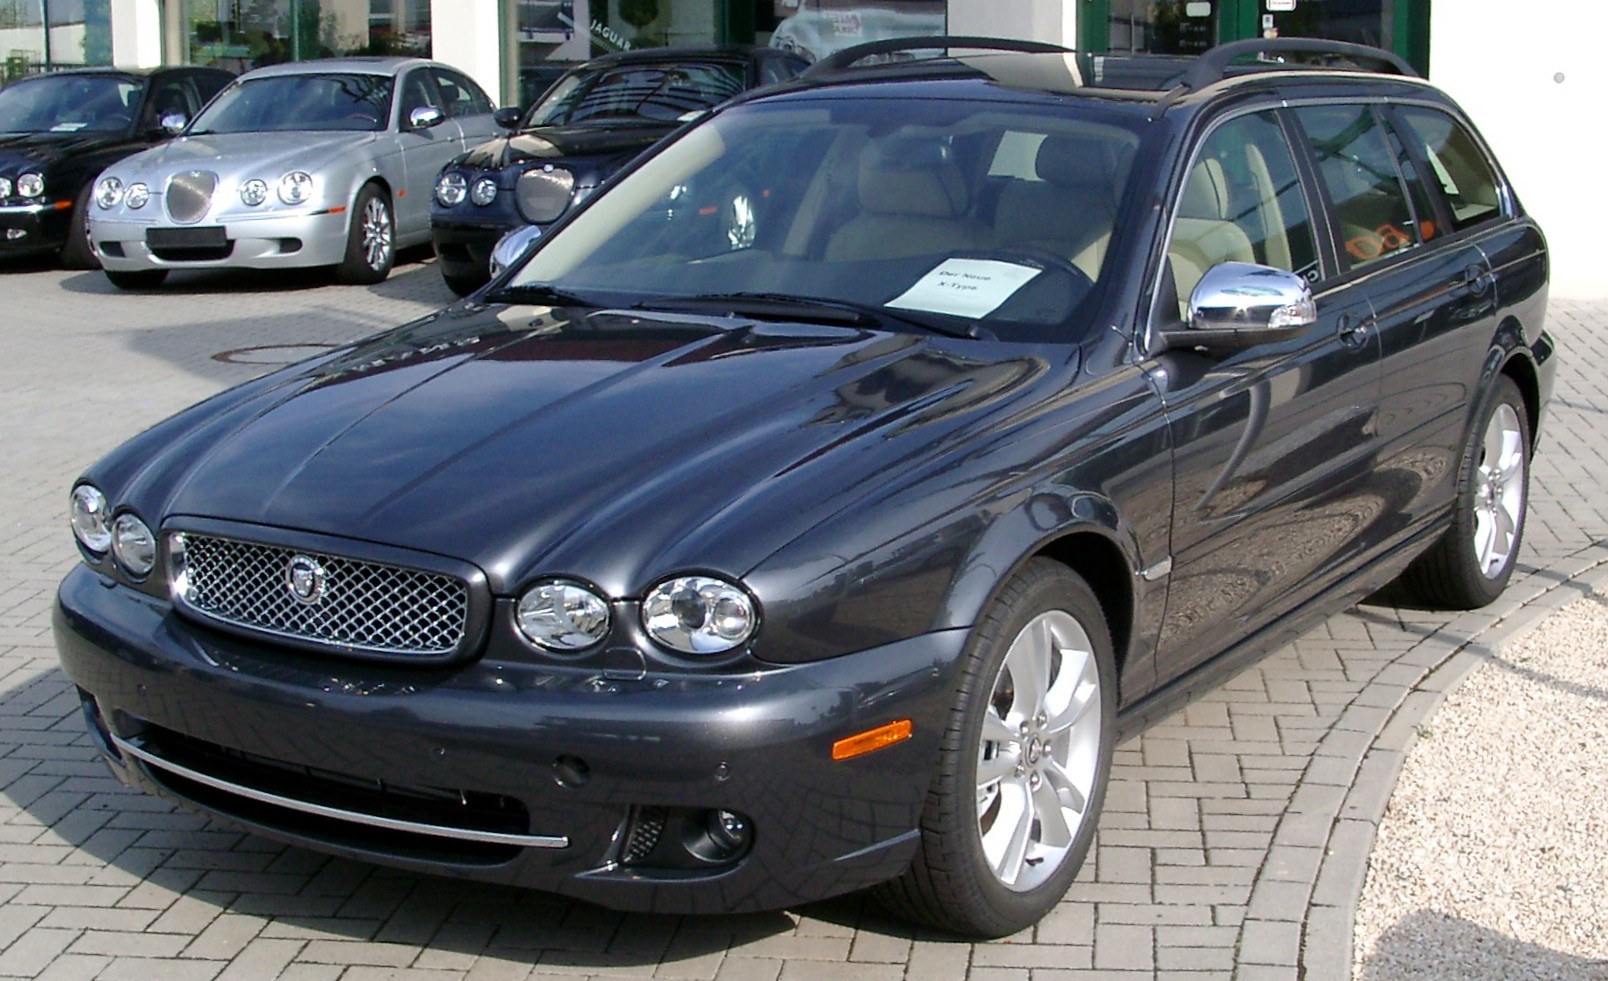 File:Jaguar X-Type Estate front 20080731.jpg - Wikipedia